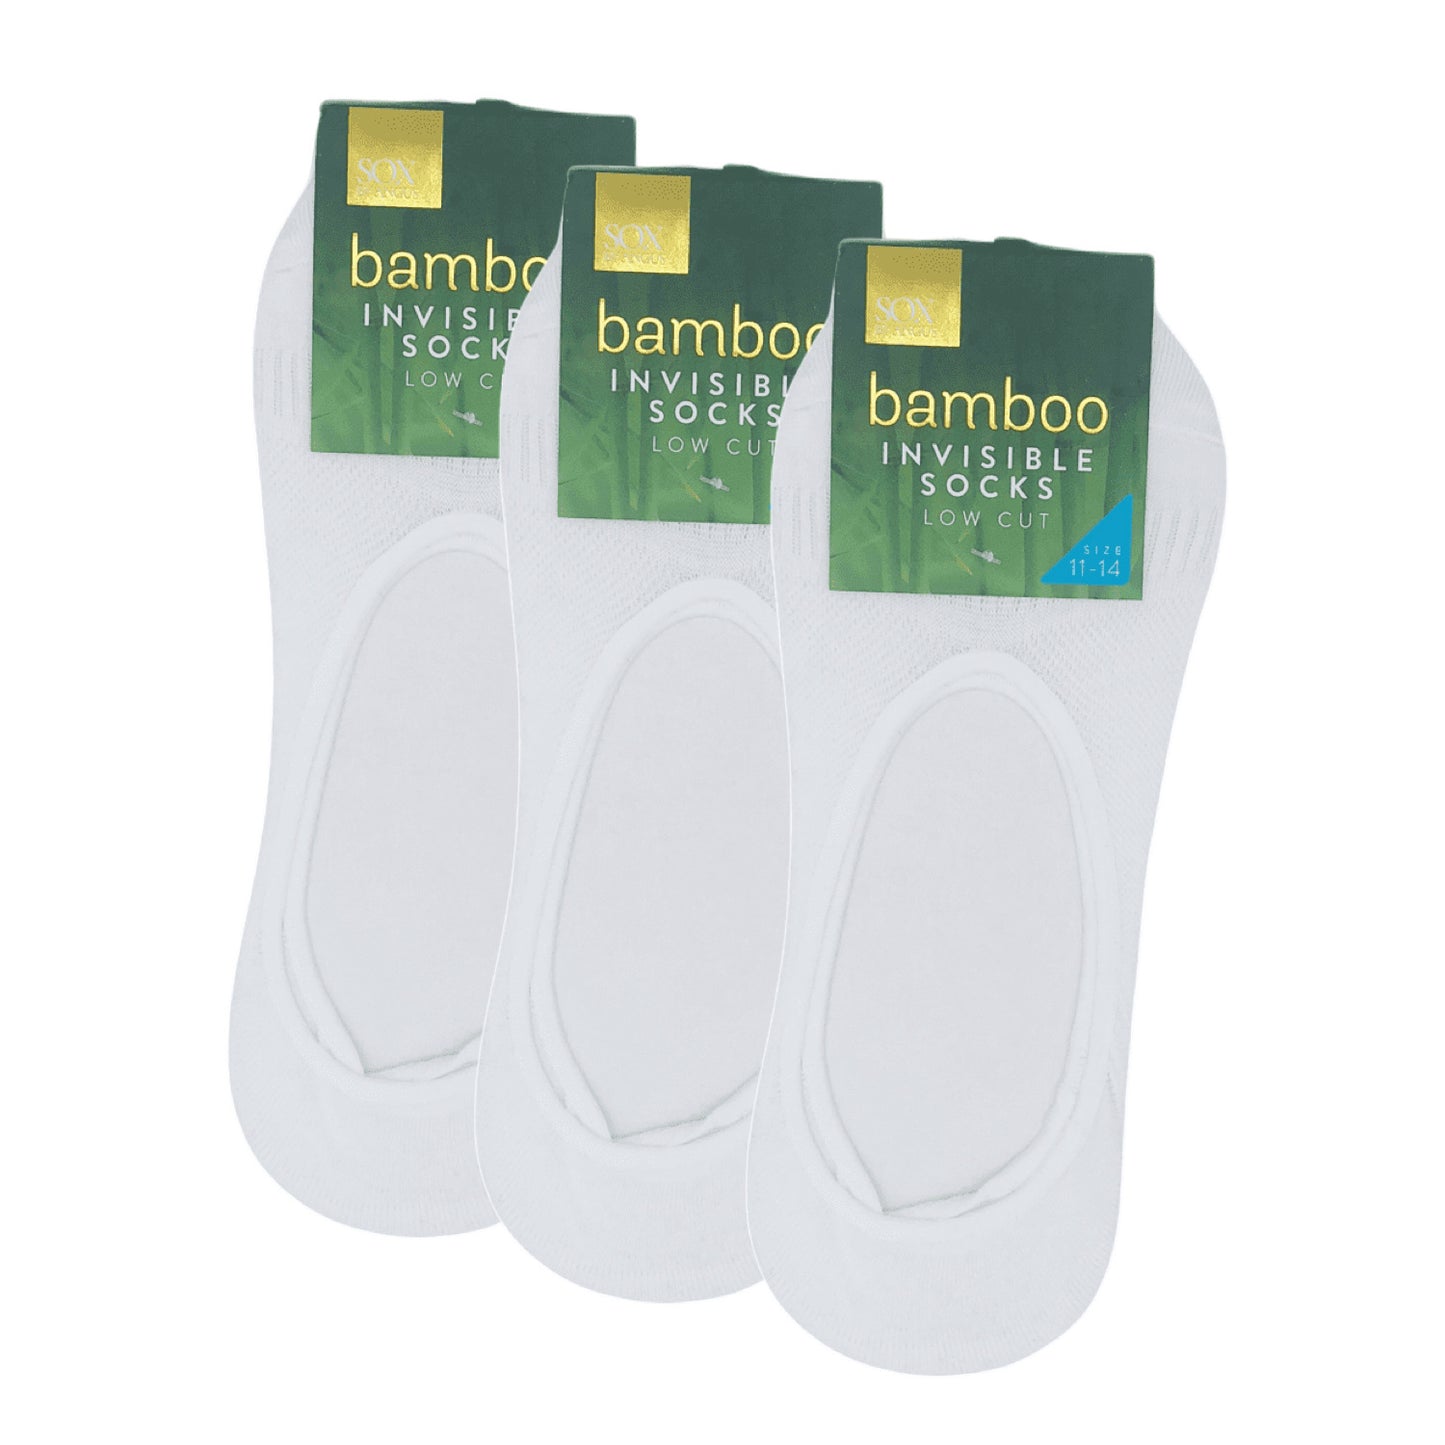 Bamboo invisible socks-medium cut-White